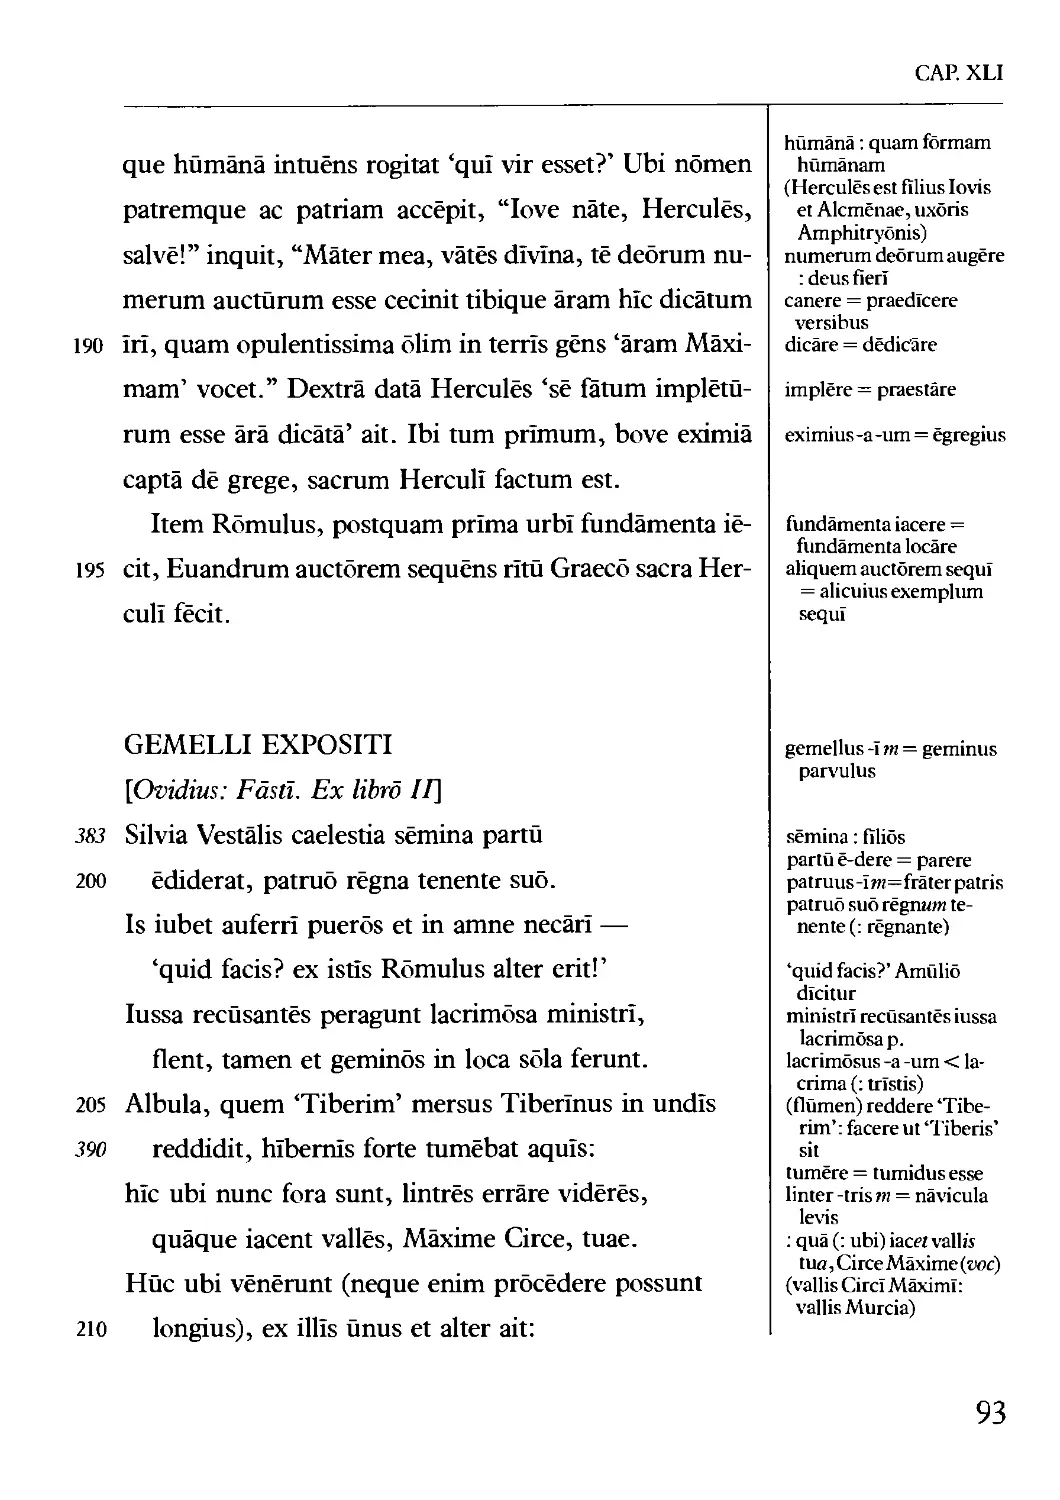 GEMELLI EXPOSITI. Ovidius
Lēctiō IV: v. 197–231